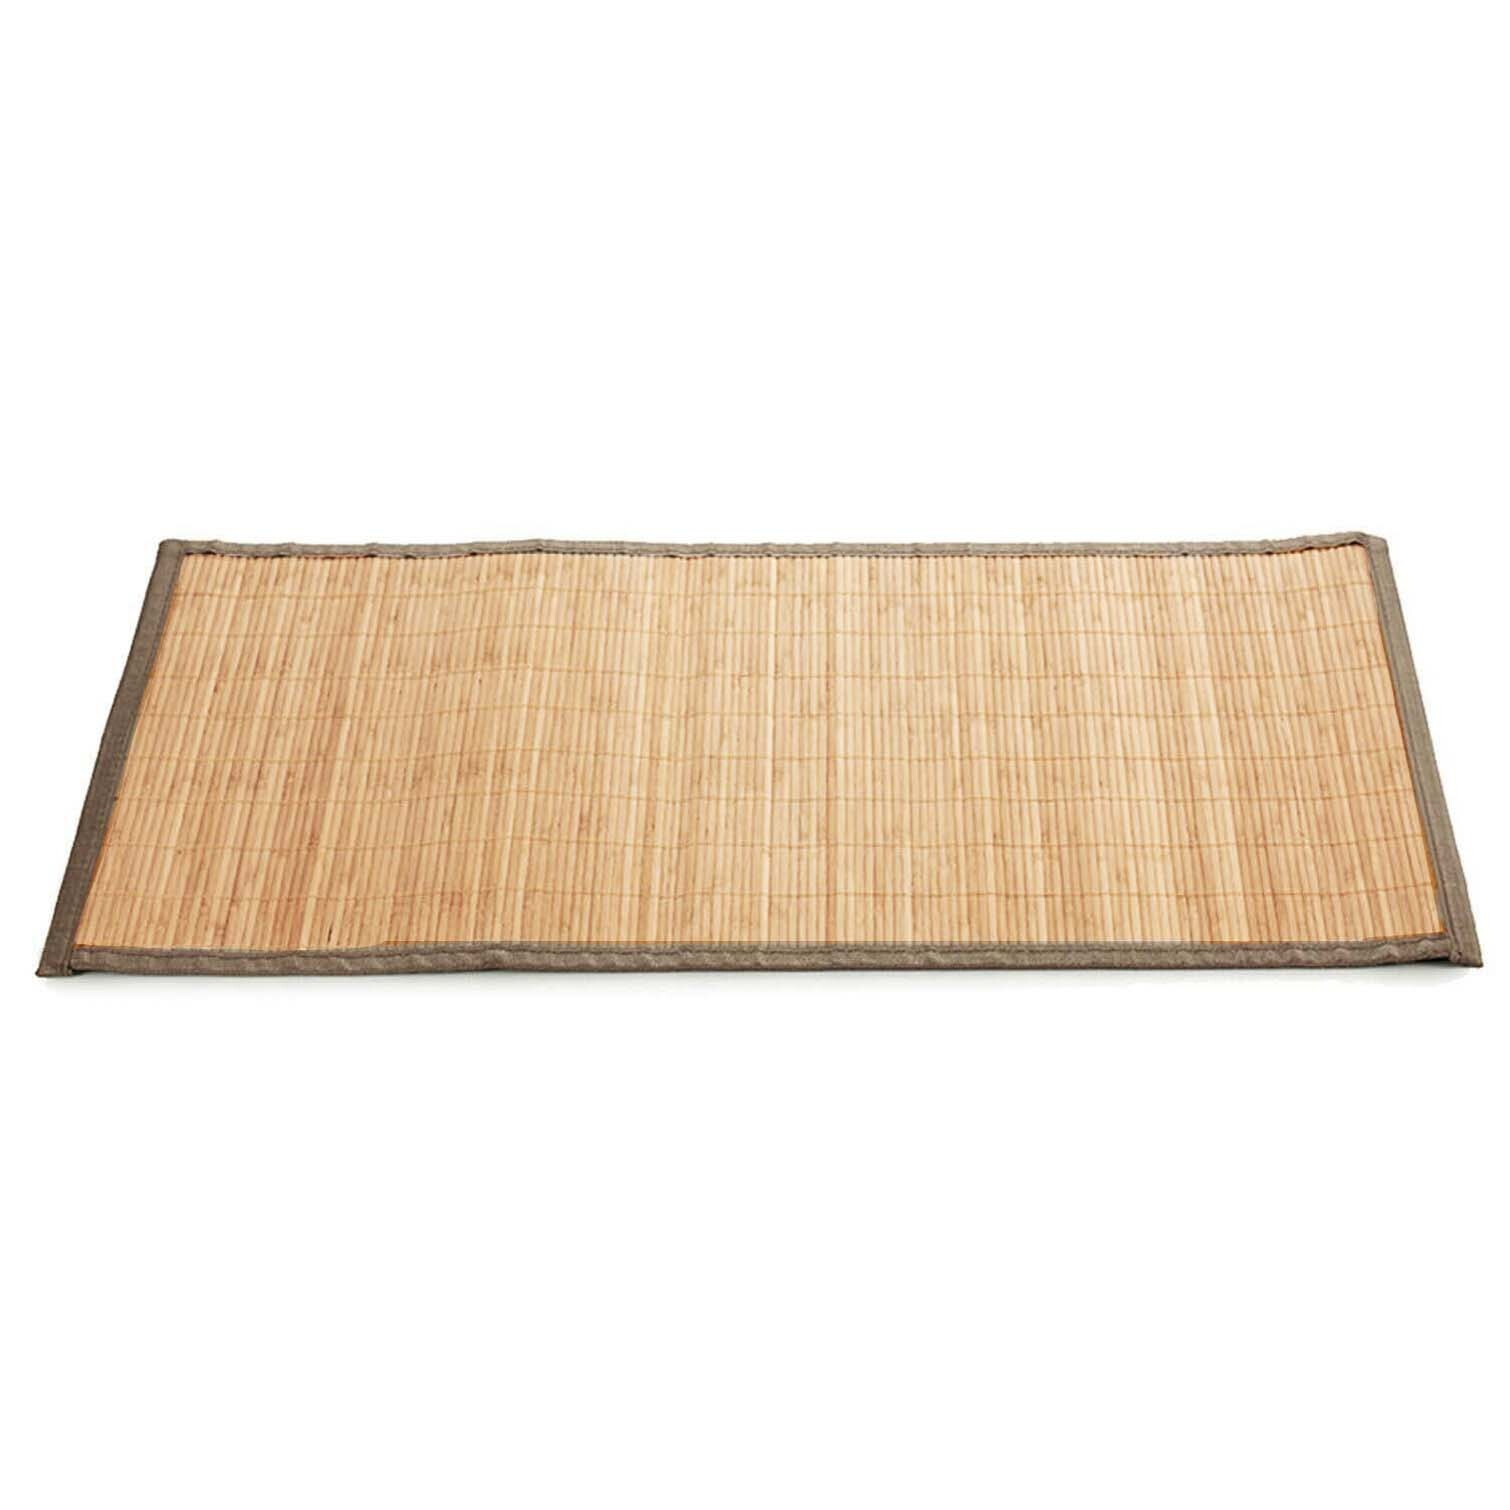 Badkamer vloermat anti-slip lichte bamboe 50 x 80 cm met grijze rand